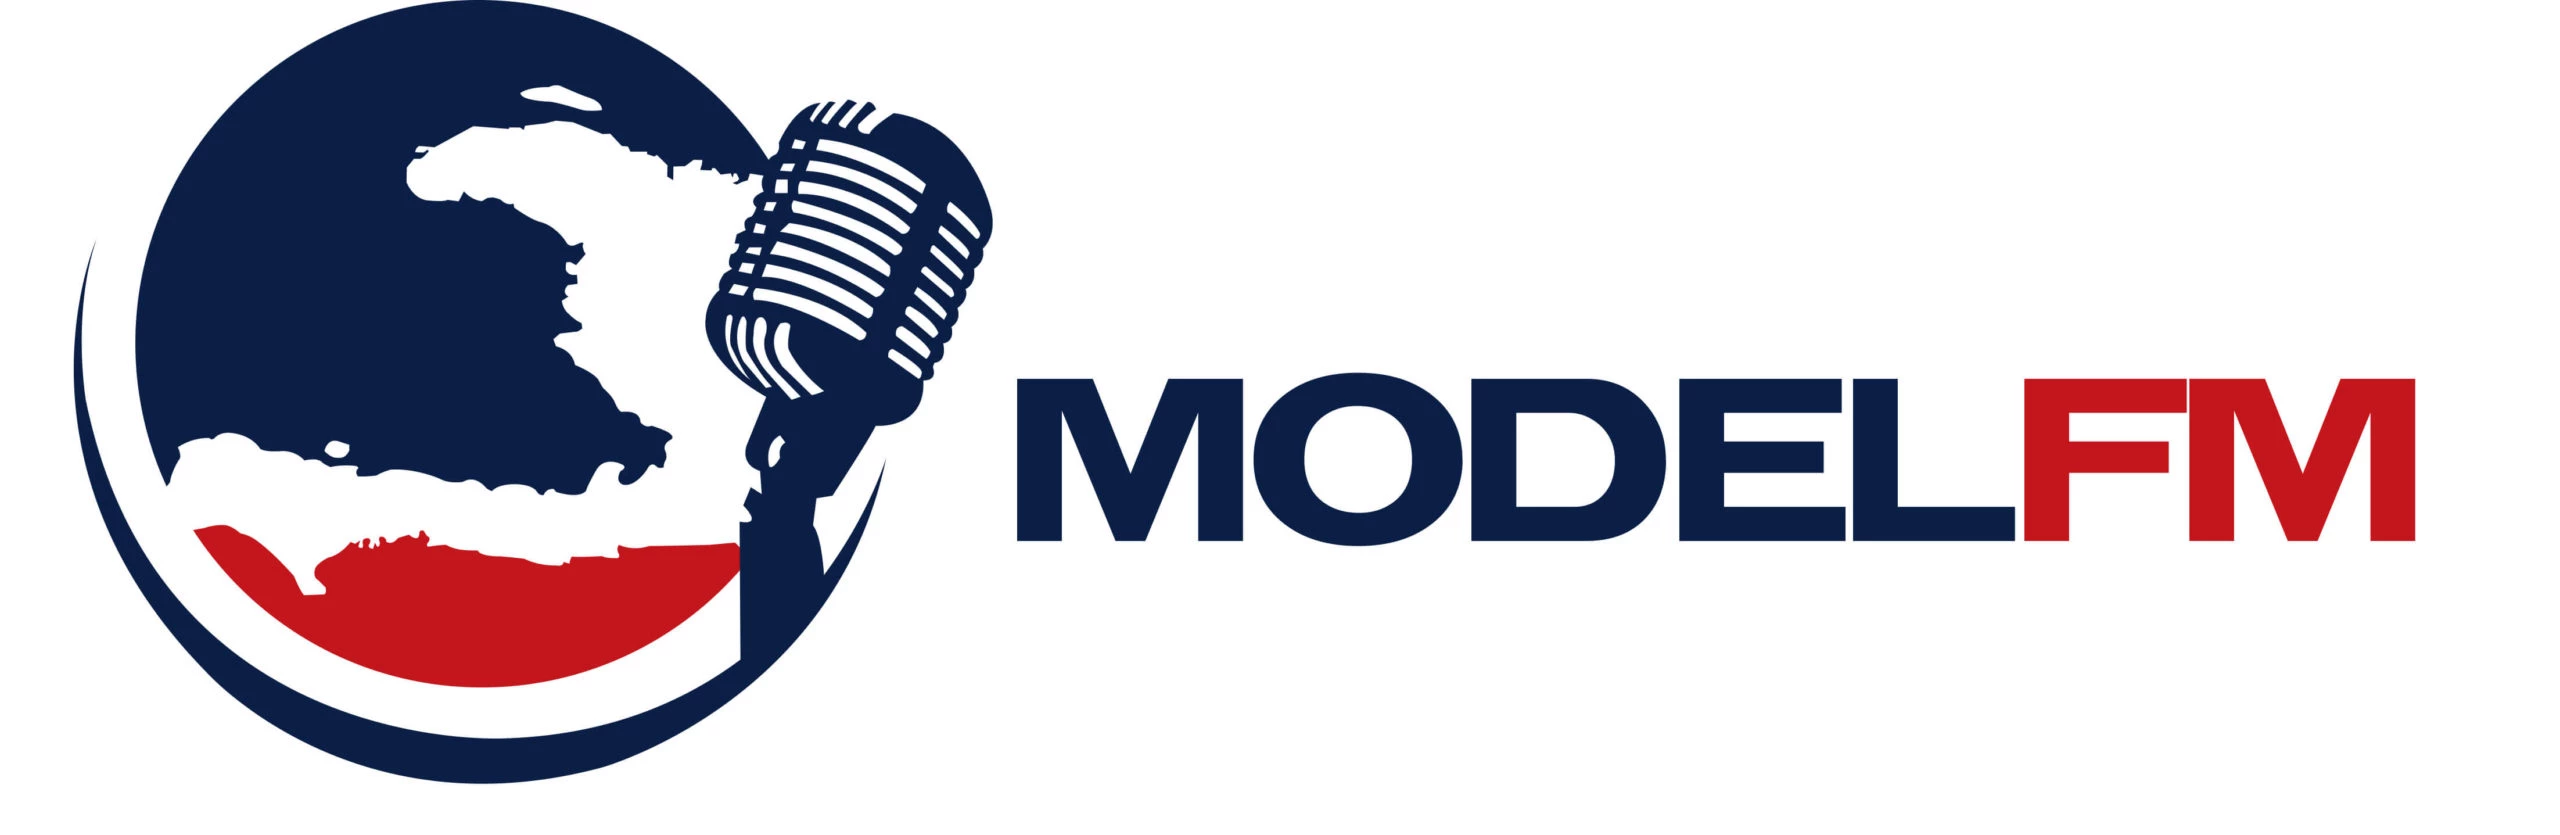 Radio Model Fm